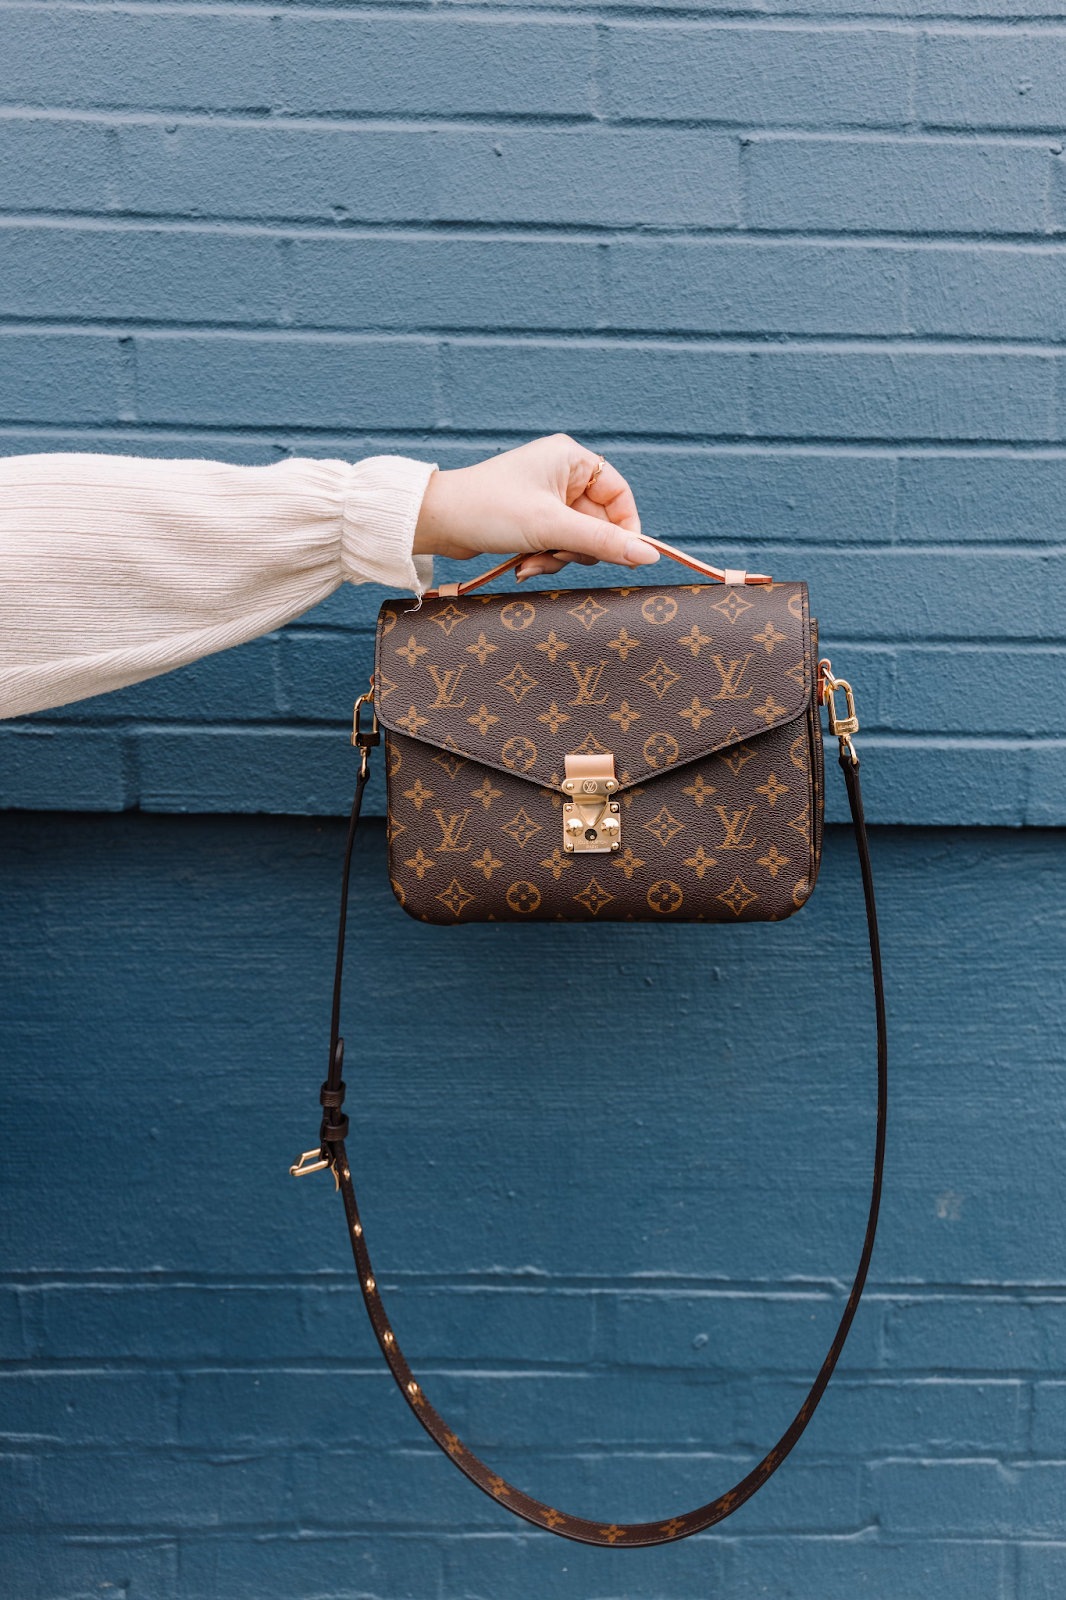 A woman's hand holding a Louis Vuitton purse.